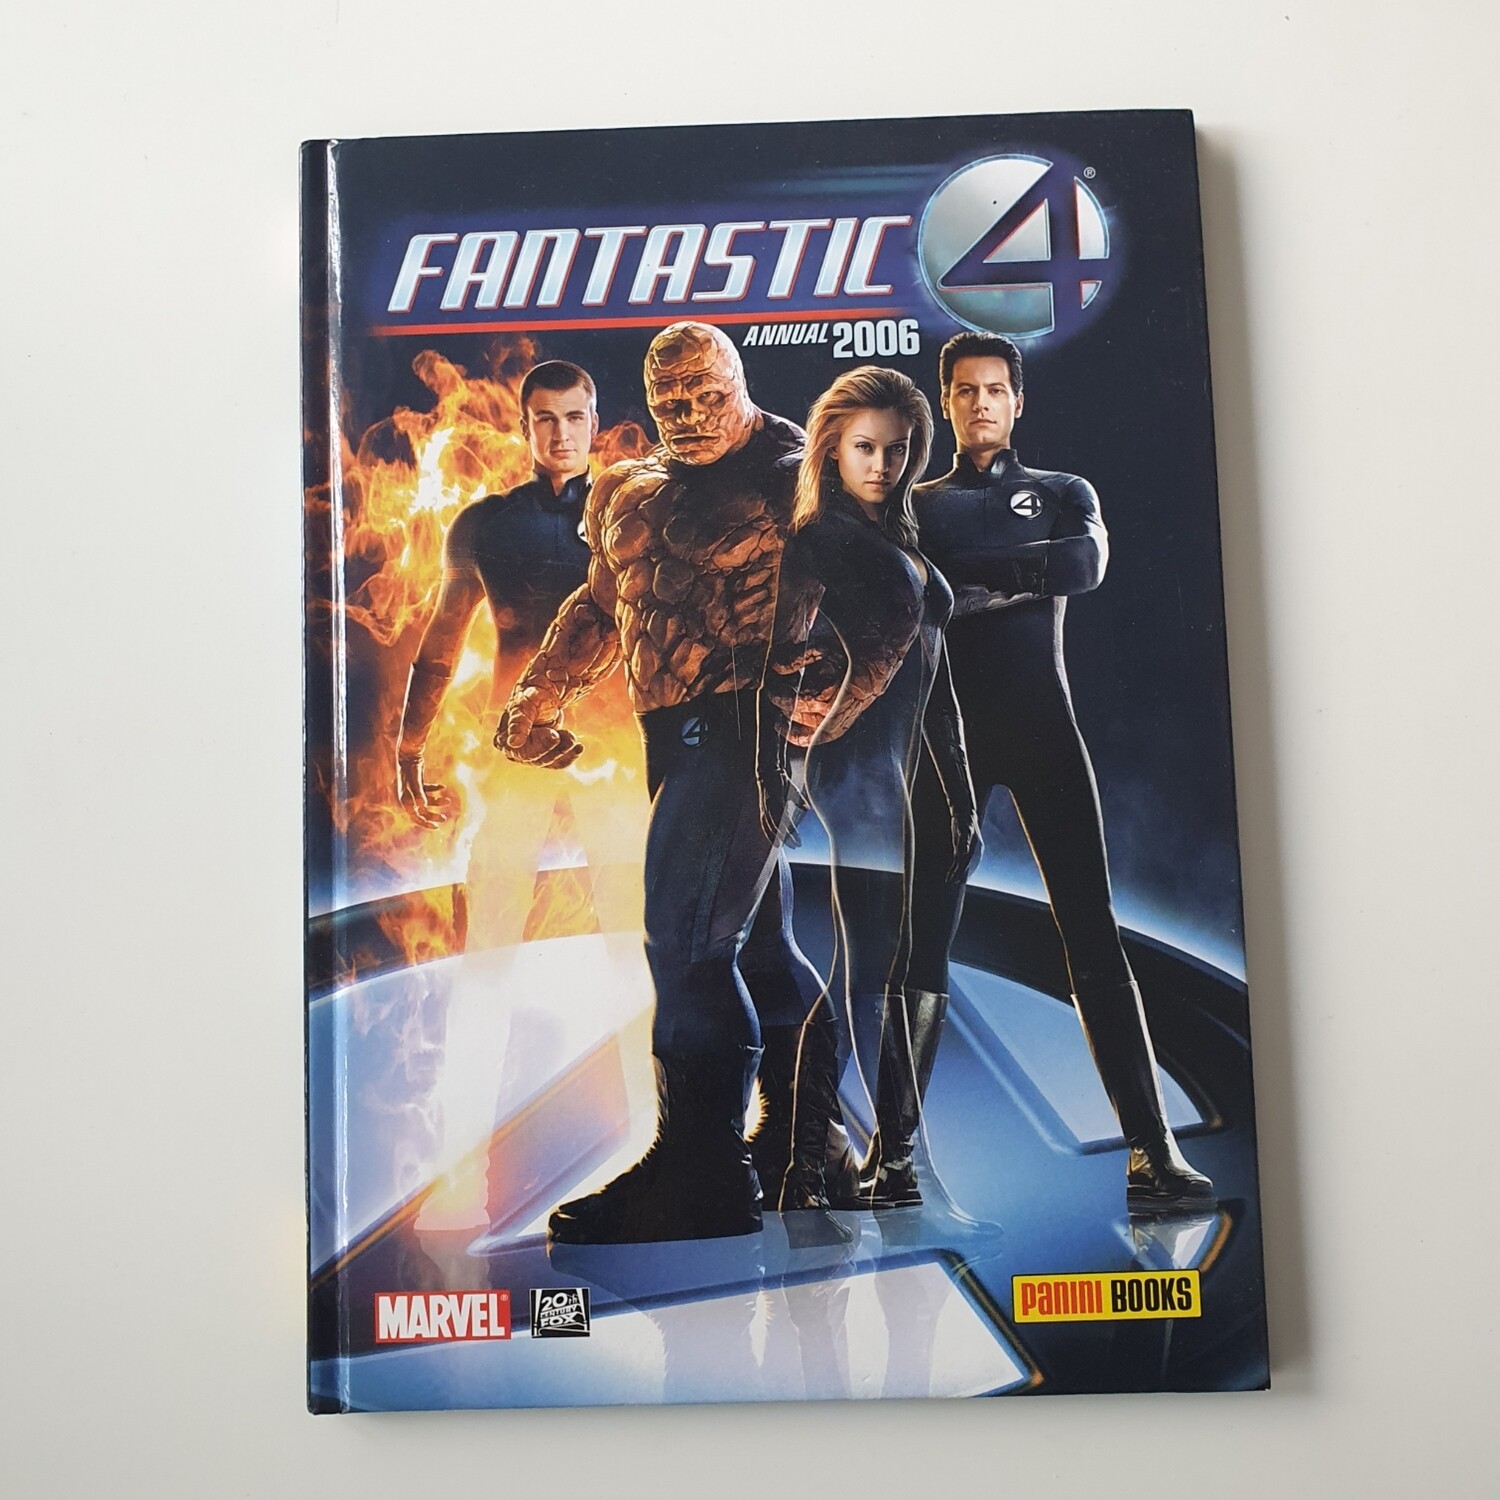 Fantastic 4 Annual 2006 - Marvel